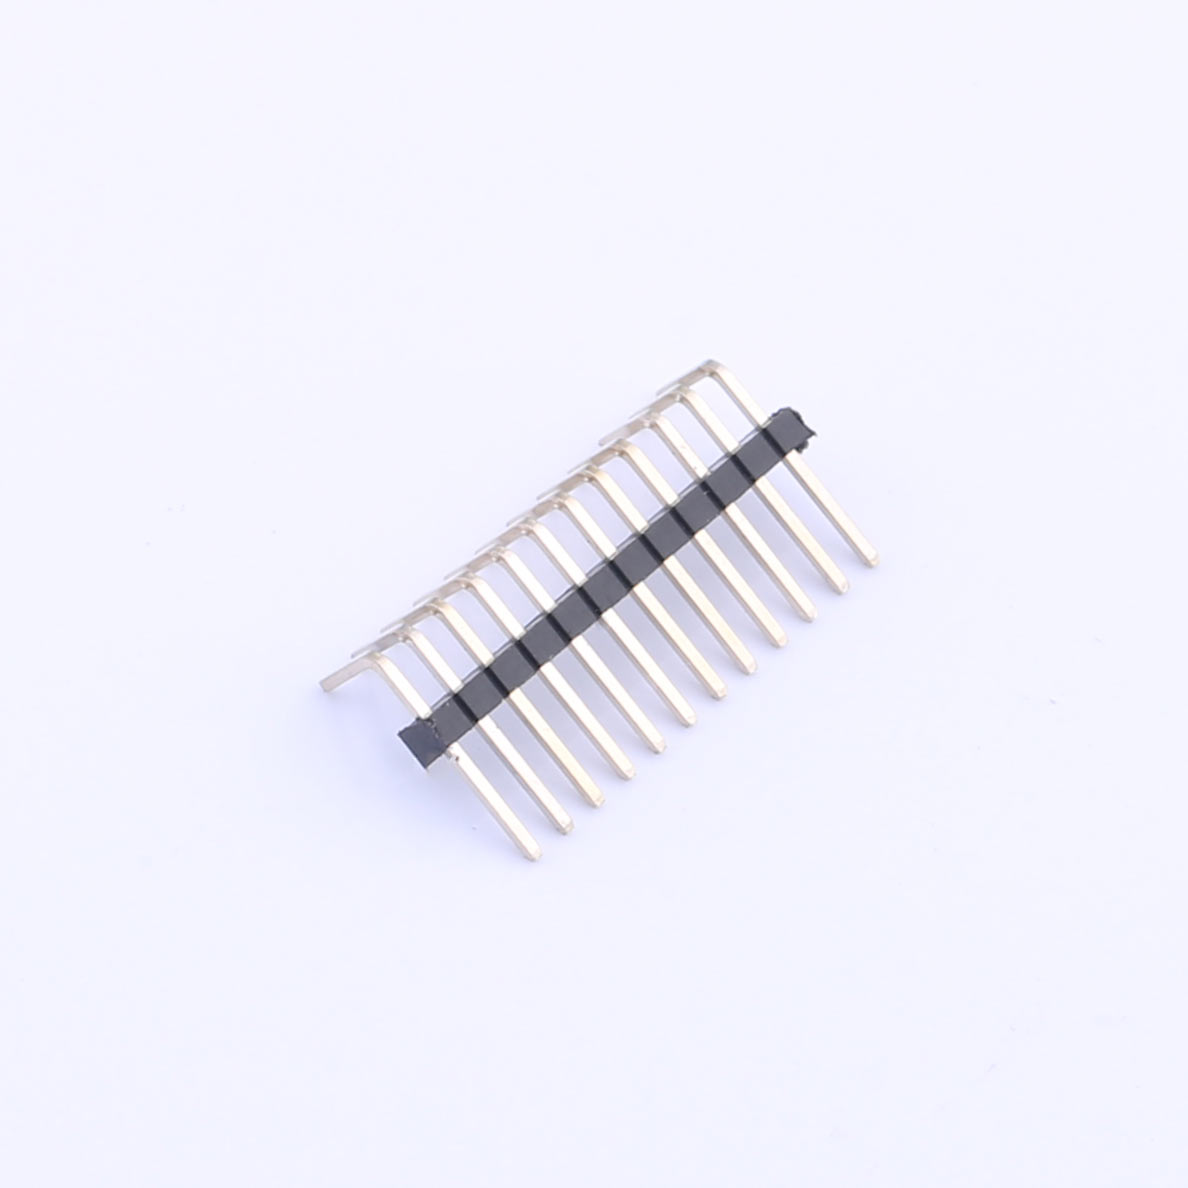 Kinghelm 1.27mm Pin Header Connector 12 Pin 1A - KH-1.27PH90-1X12P-L10.5